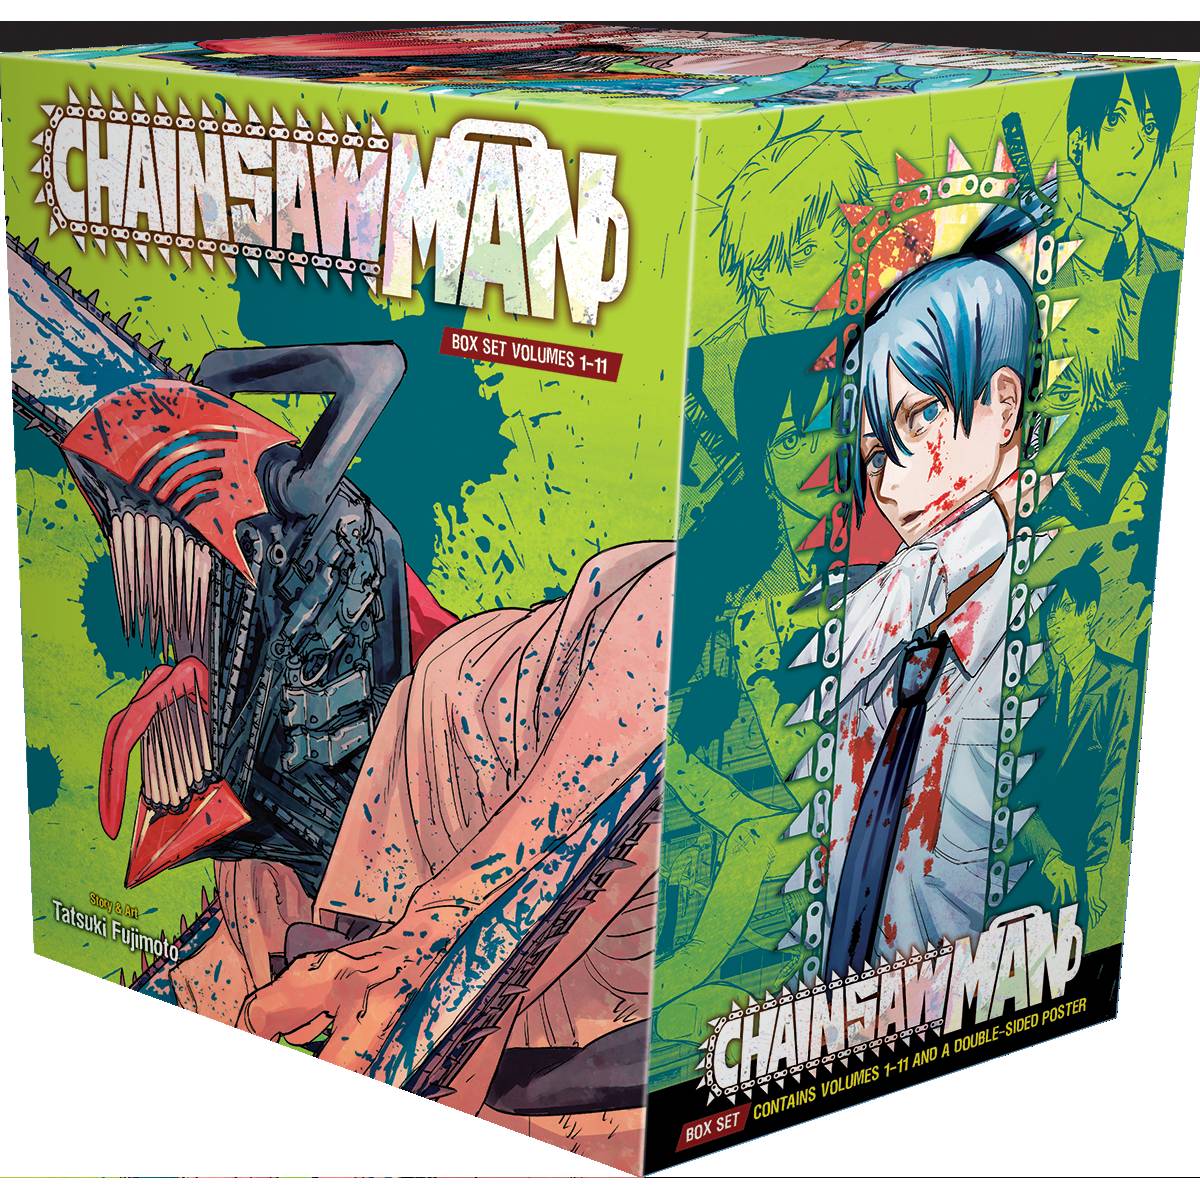 Chainsaw Man, Vol. 10, Book by Tatsuki Fujimoto, Official Publisher Page